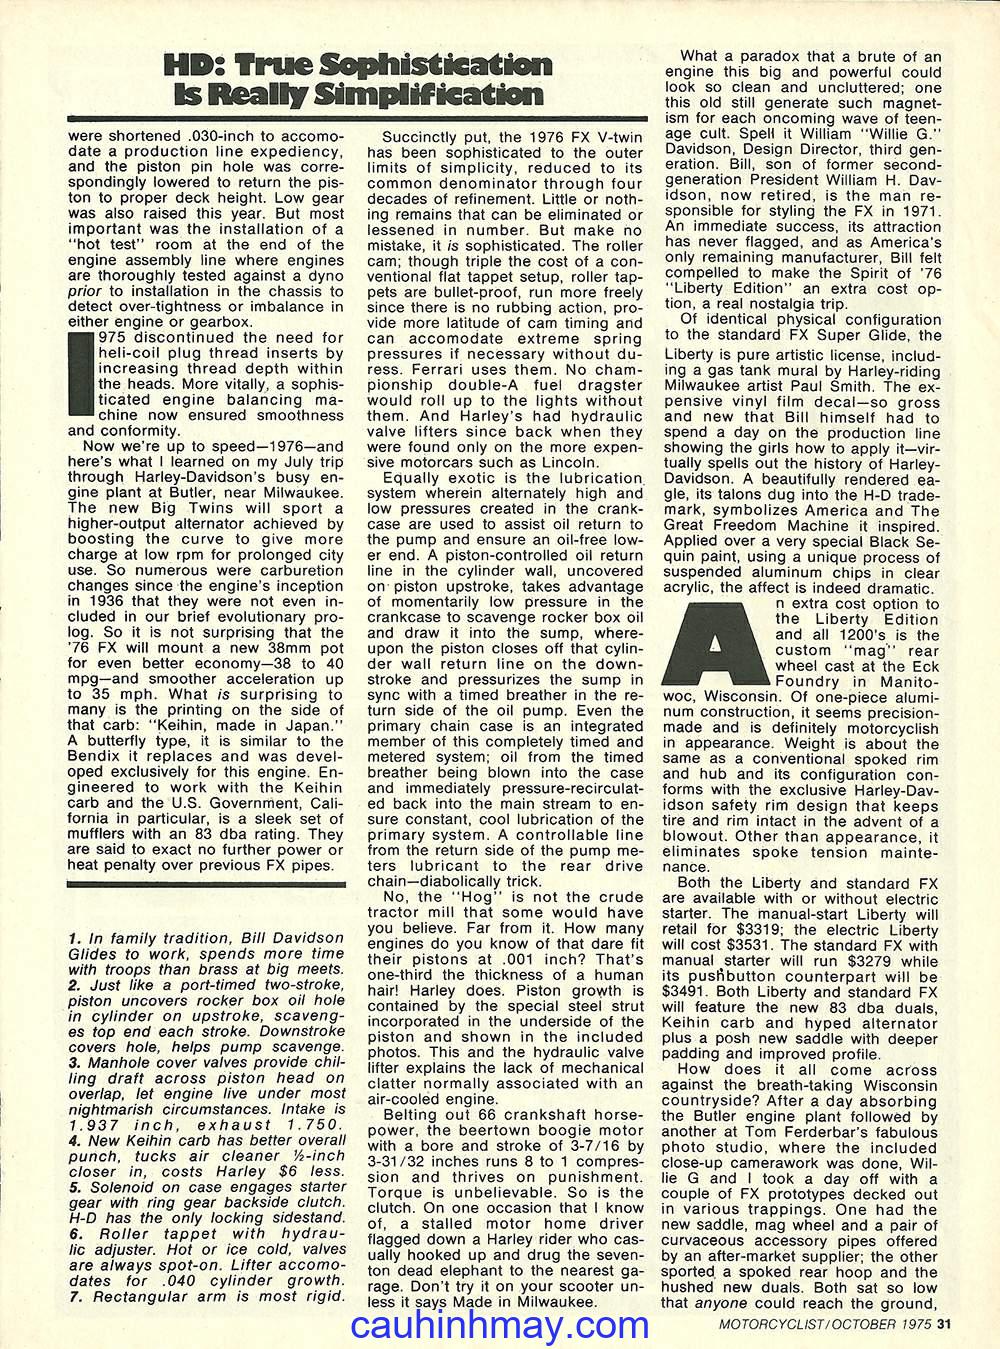 1976 HARLEY DAVIDSON SUPER GLIDE LIBERTY EDITION  - cauhinhmay.com